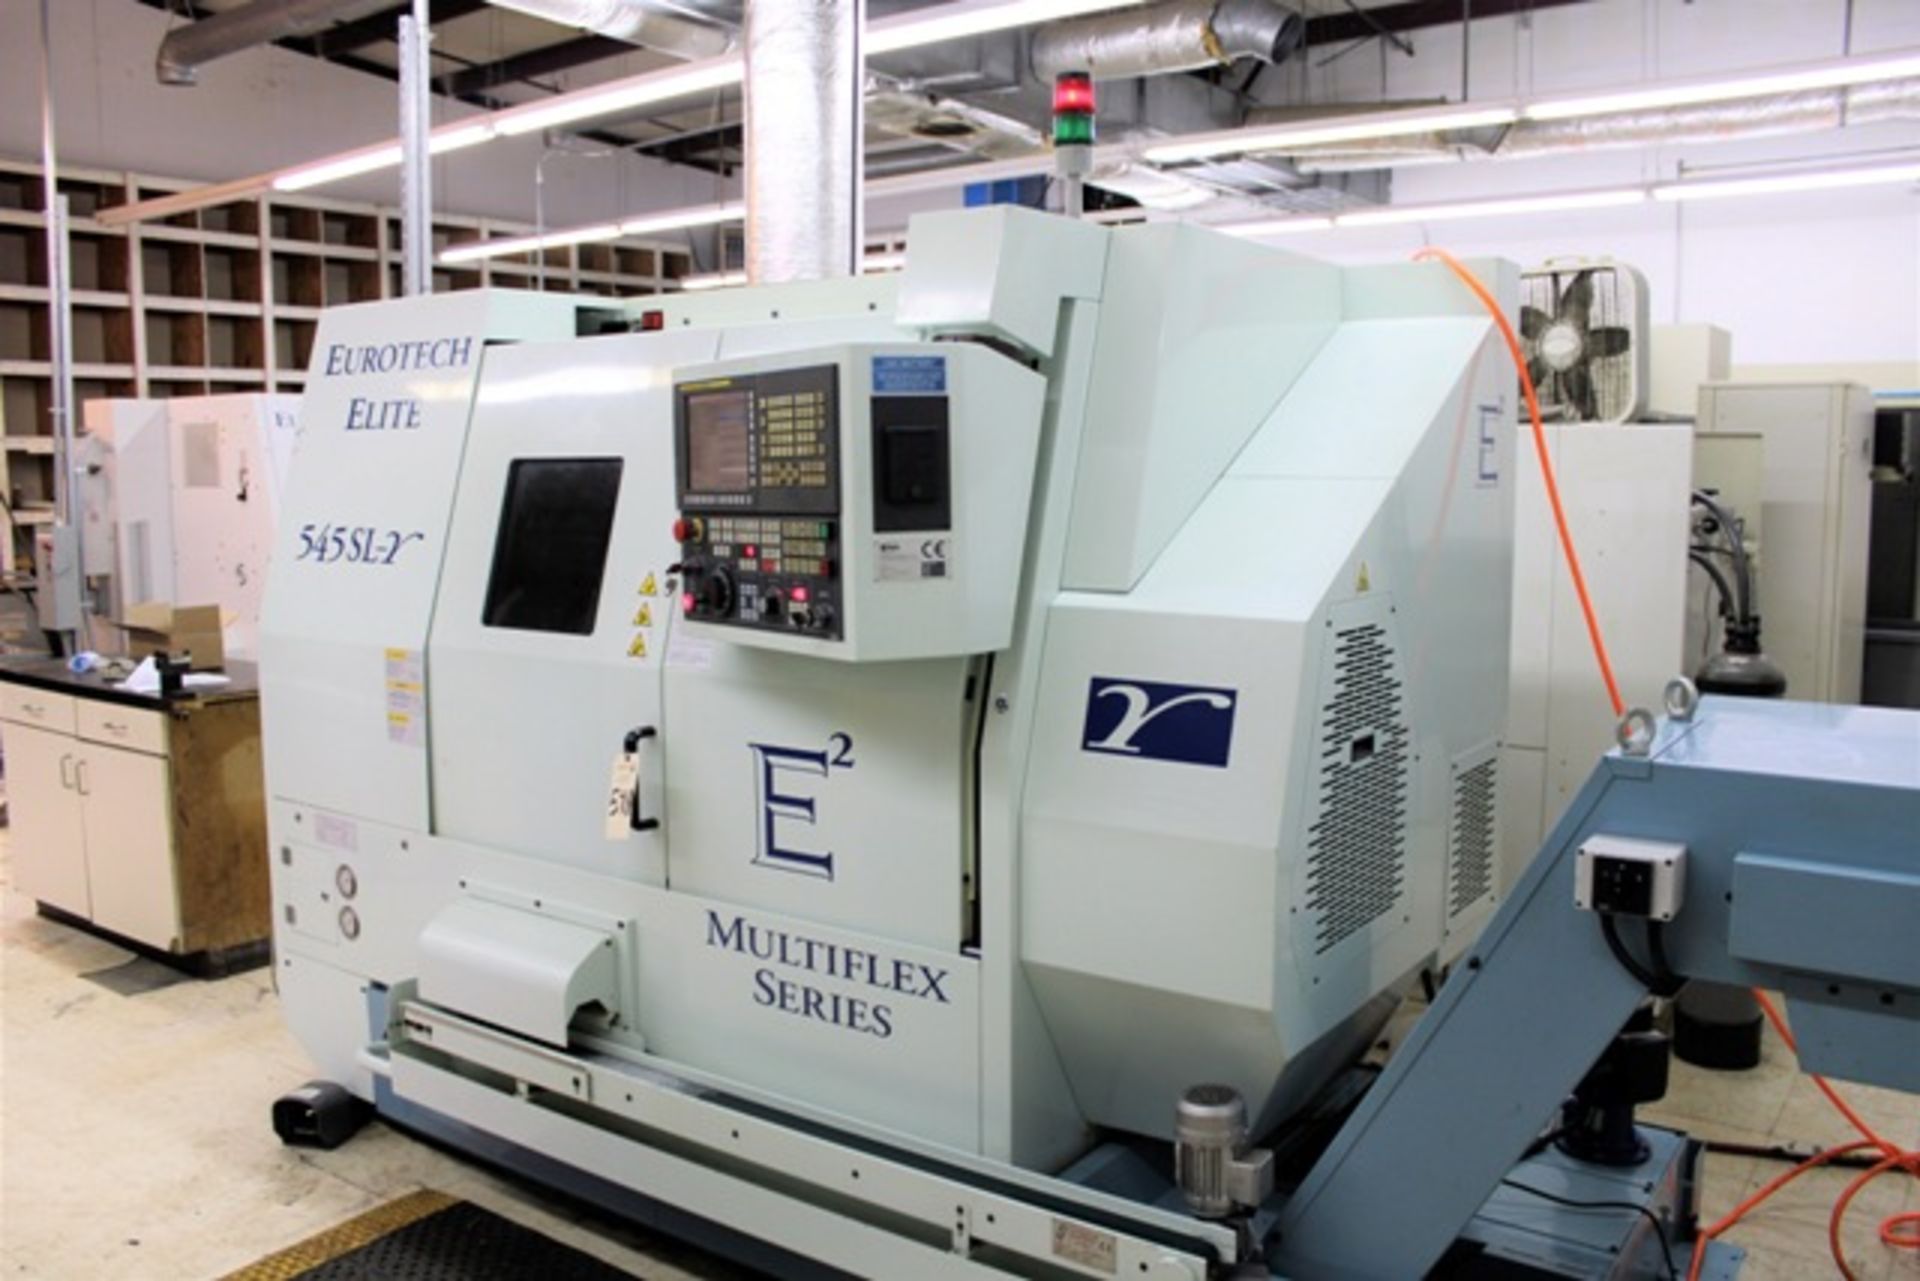 Eurotech Elite 545 SL-Y Mill-Turn CNC Lathe - Image 2 of 7